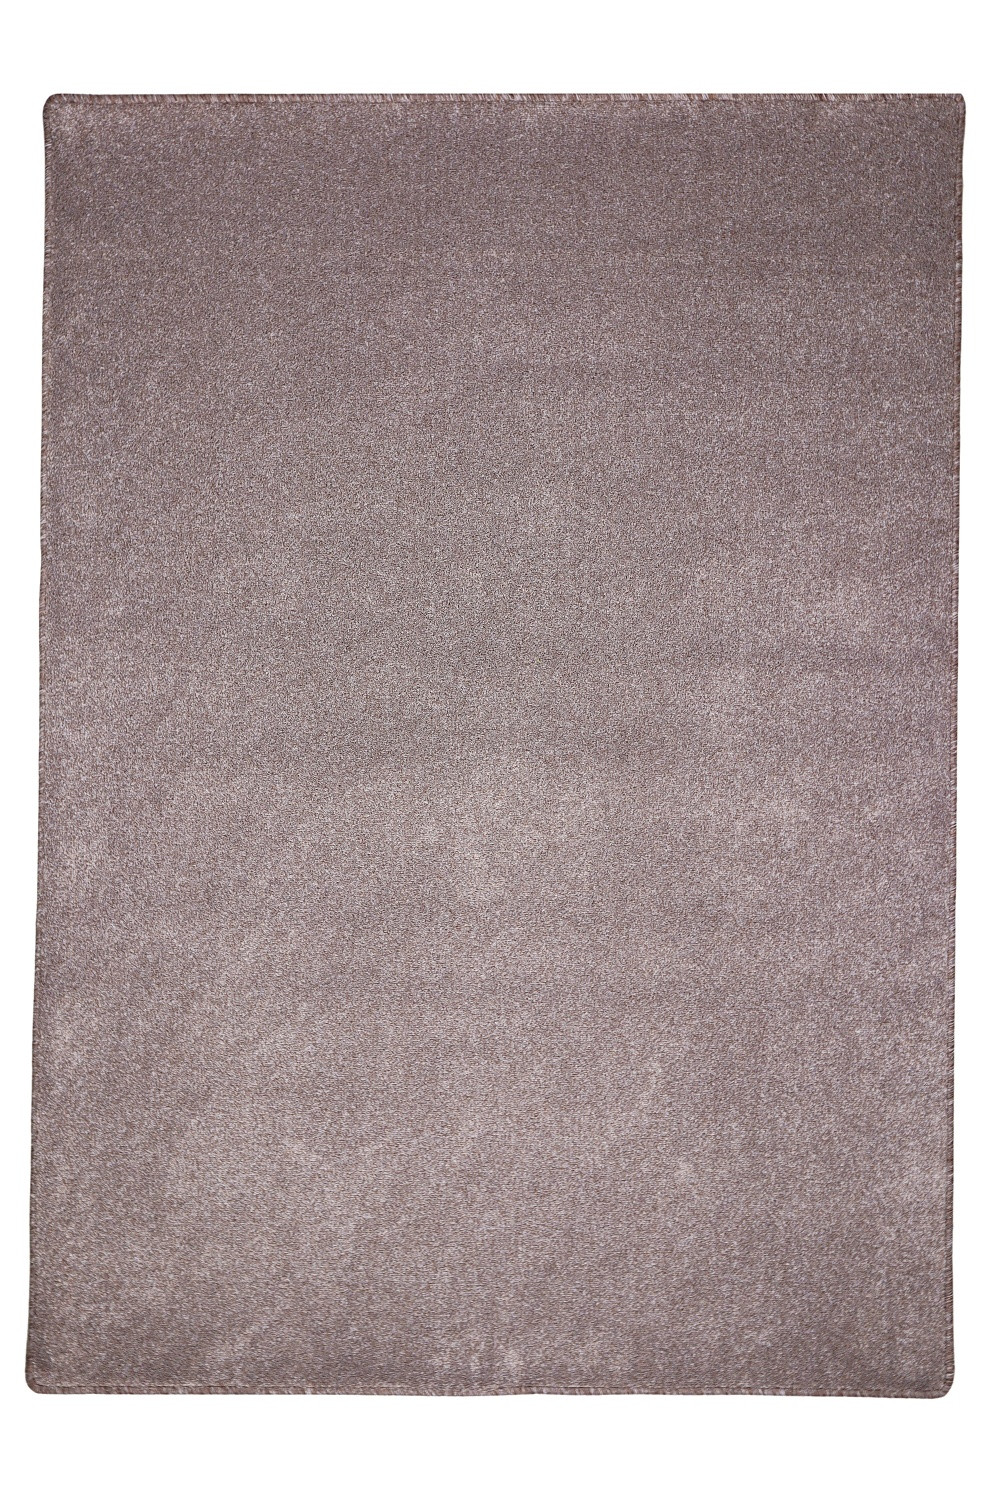 Kusový koberec Apollo Soft béžový - 100x150 cm Vopi koberce 